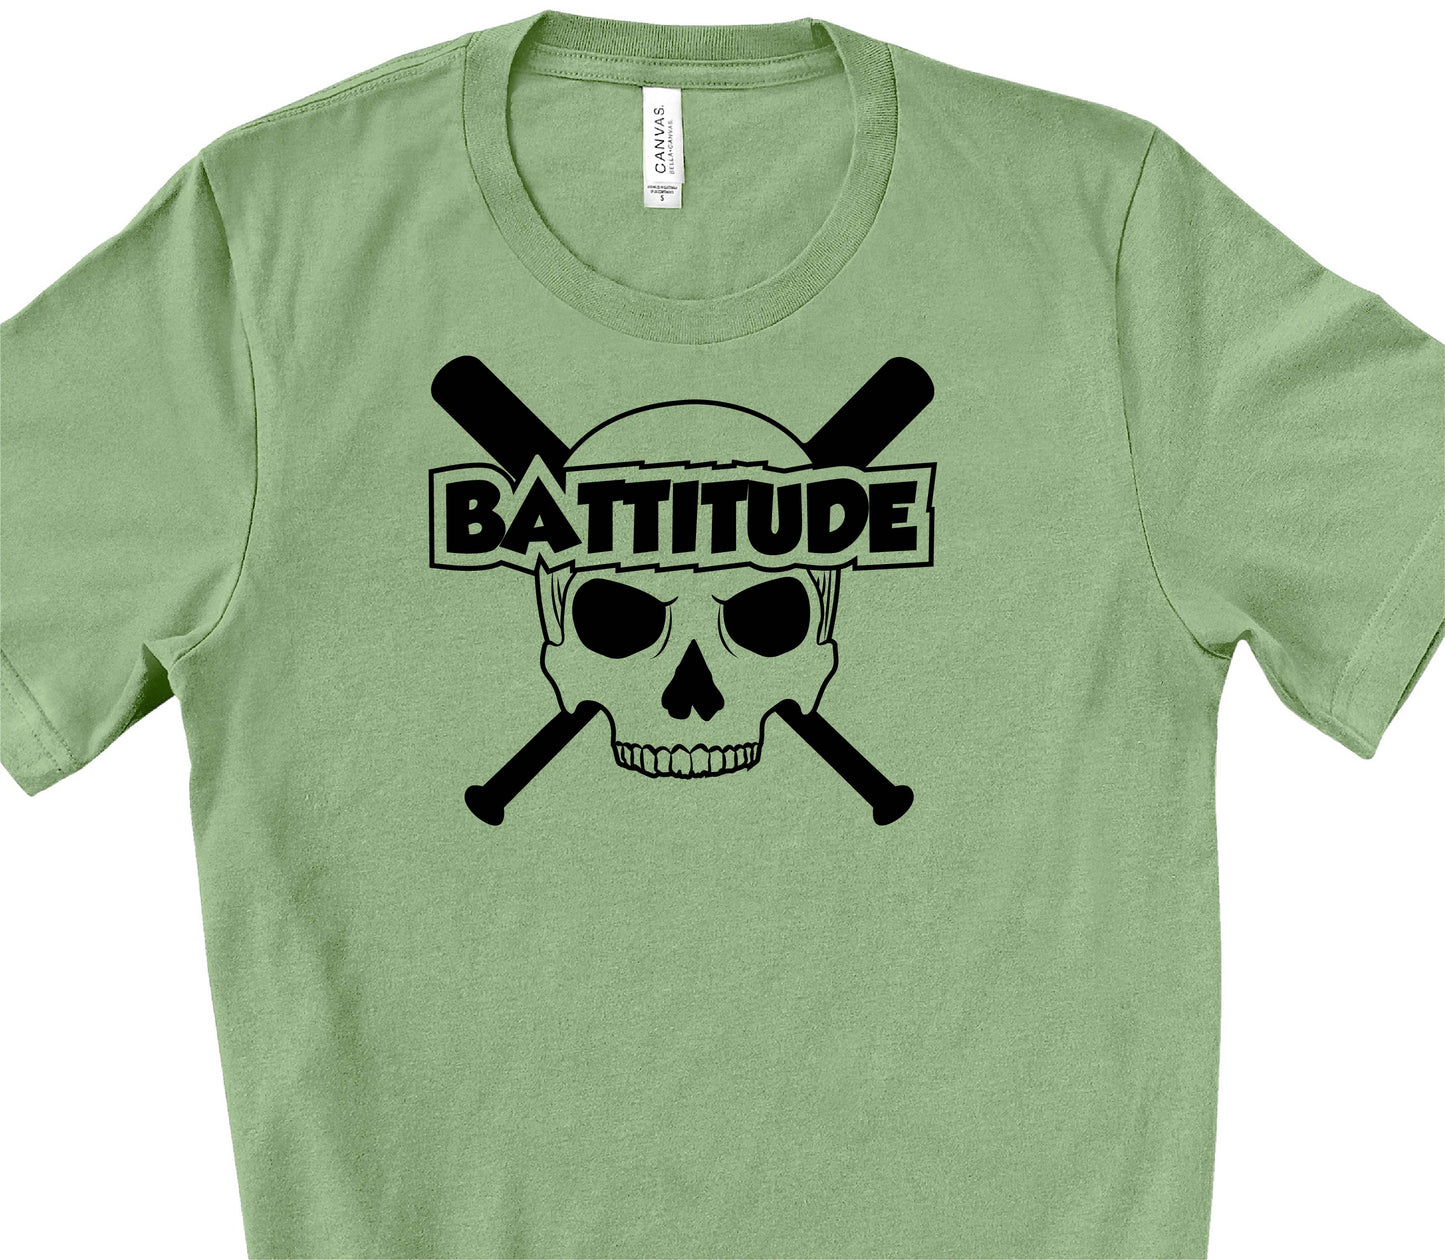 Battitude Co-Ed Softball T-Shirt